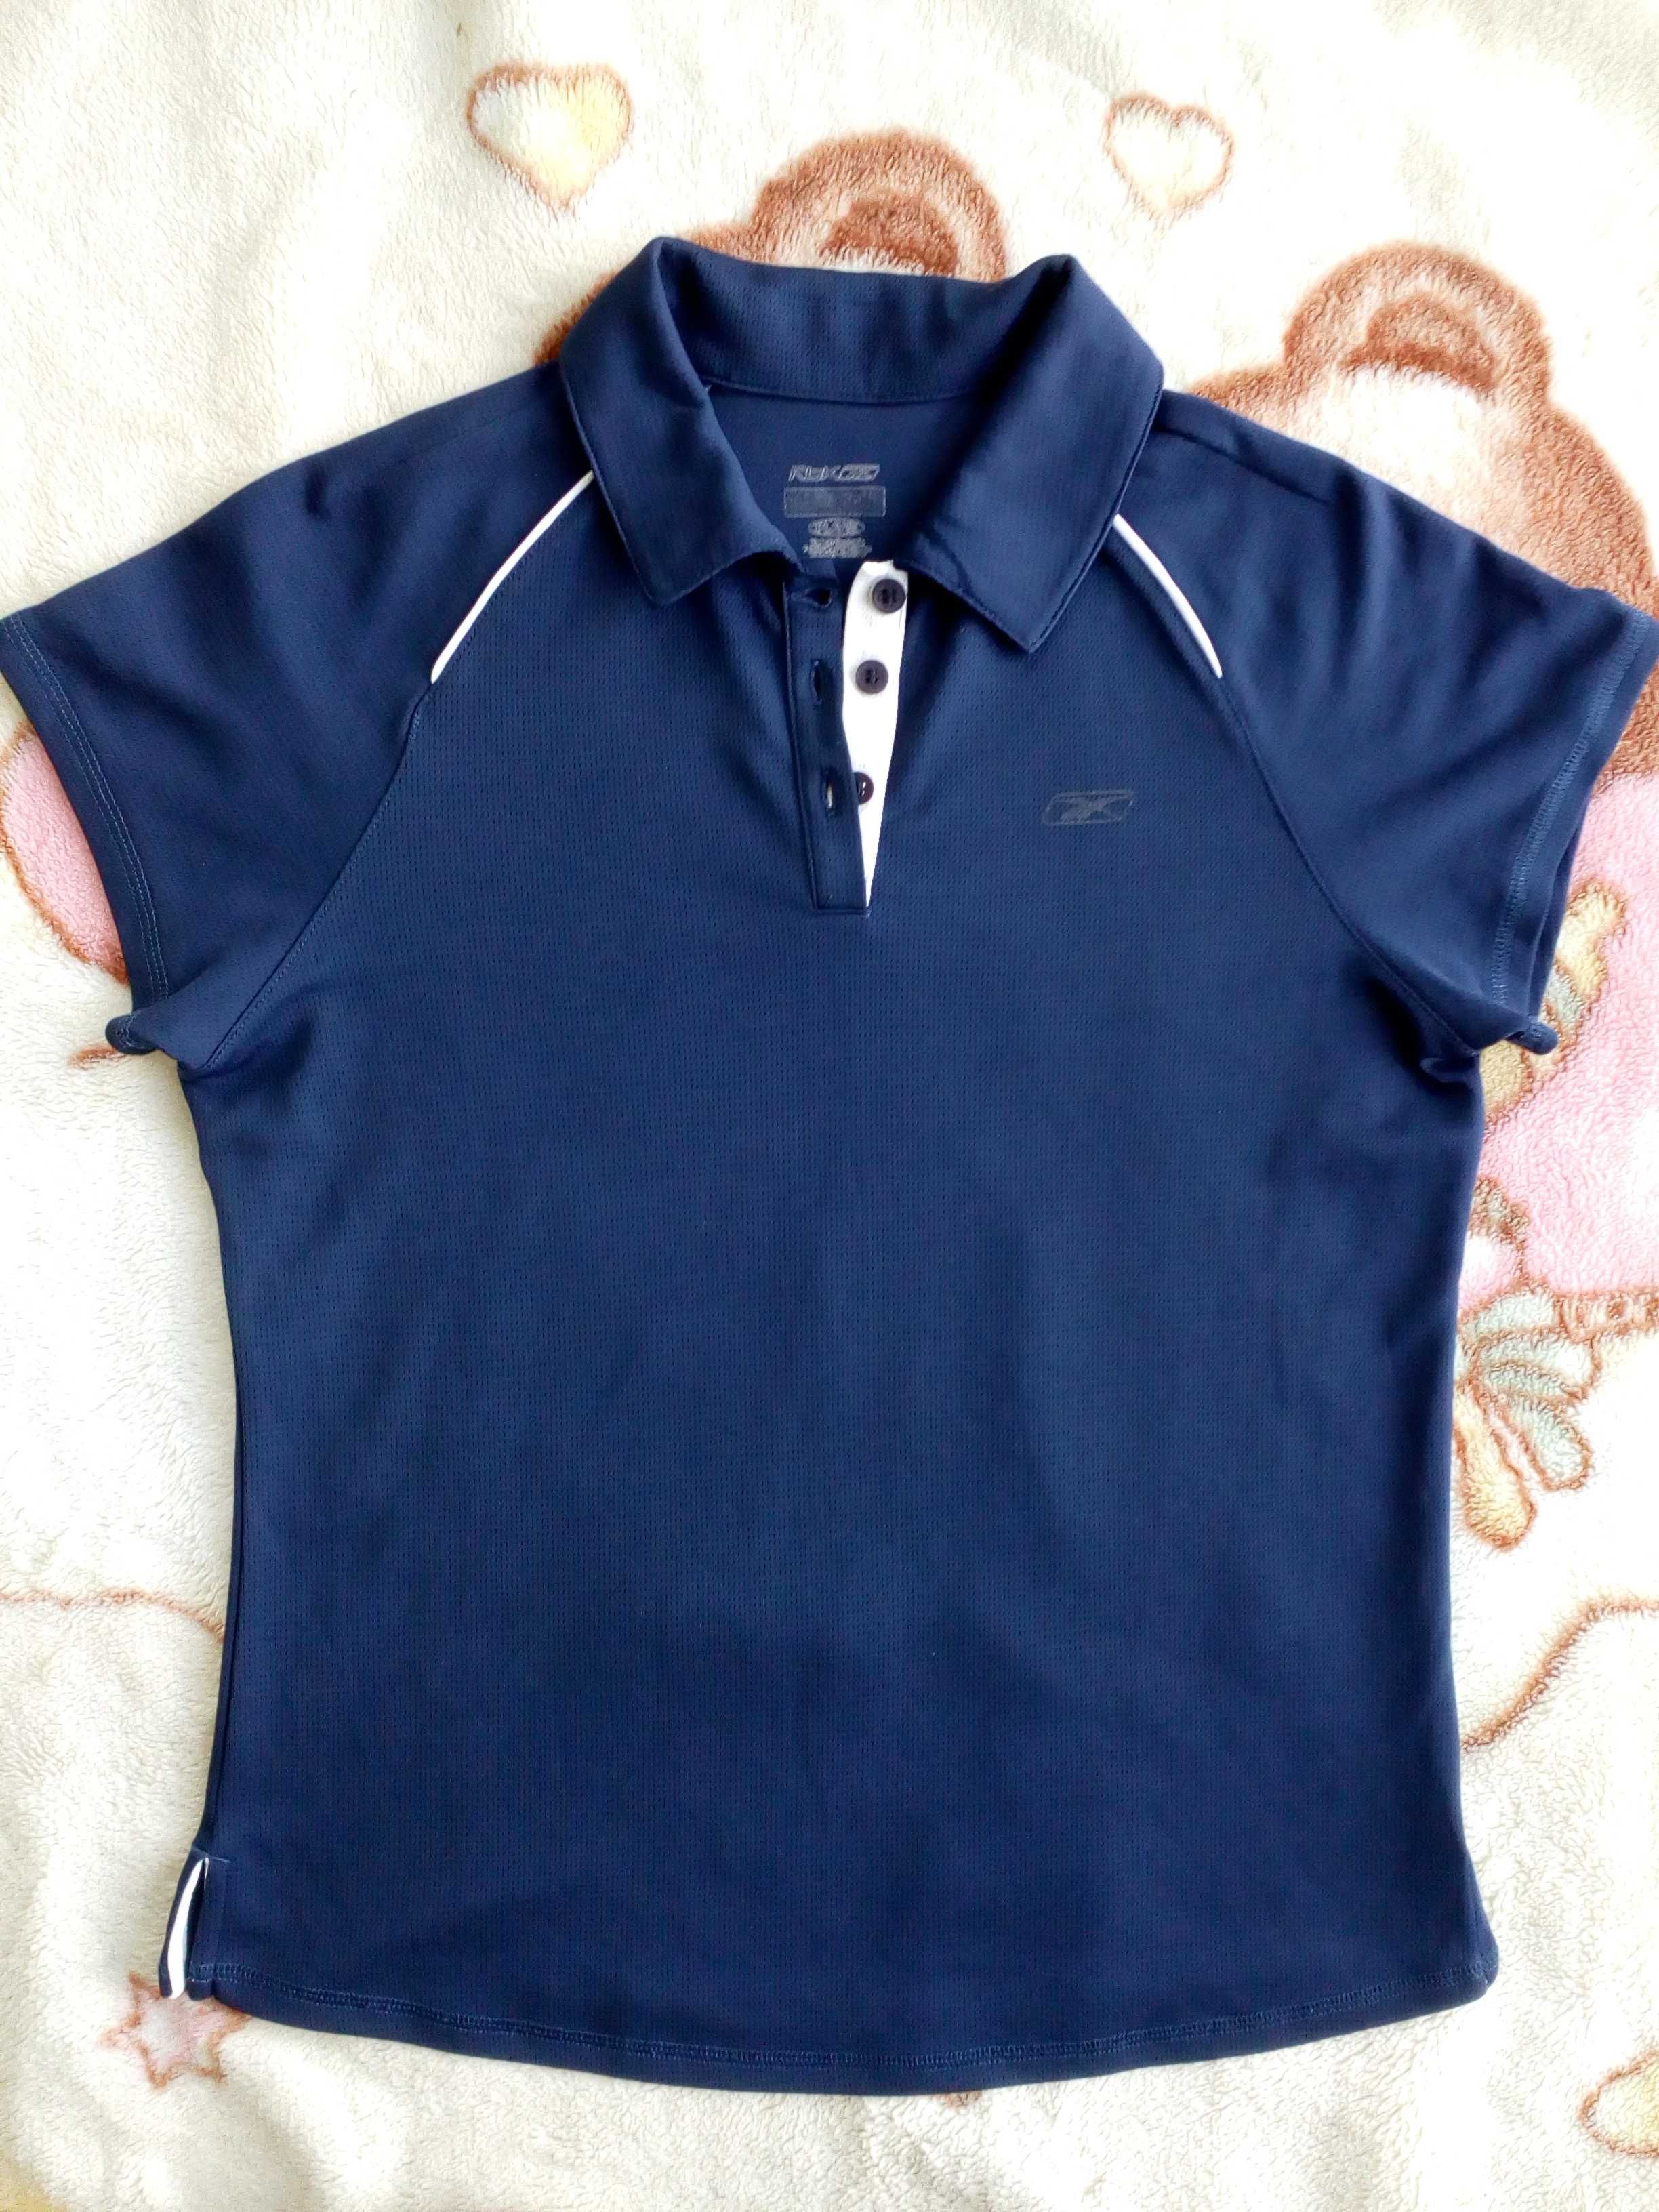 Granatowa bluzka sportowa Reebok koszulka polo ok. 36 - 38